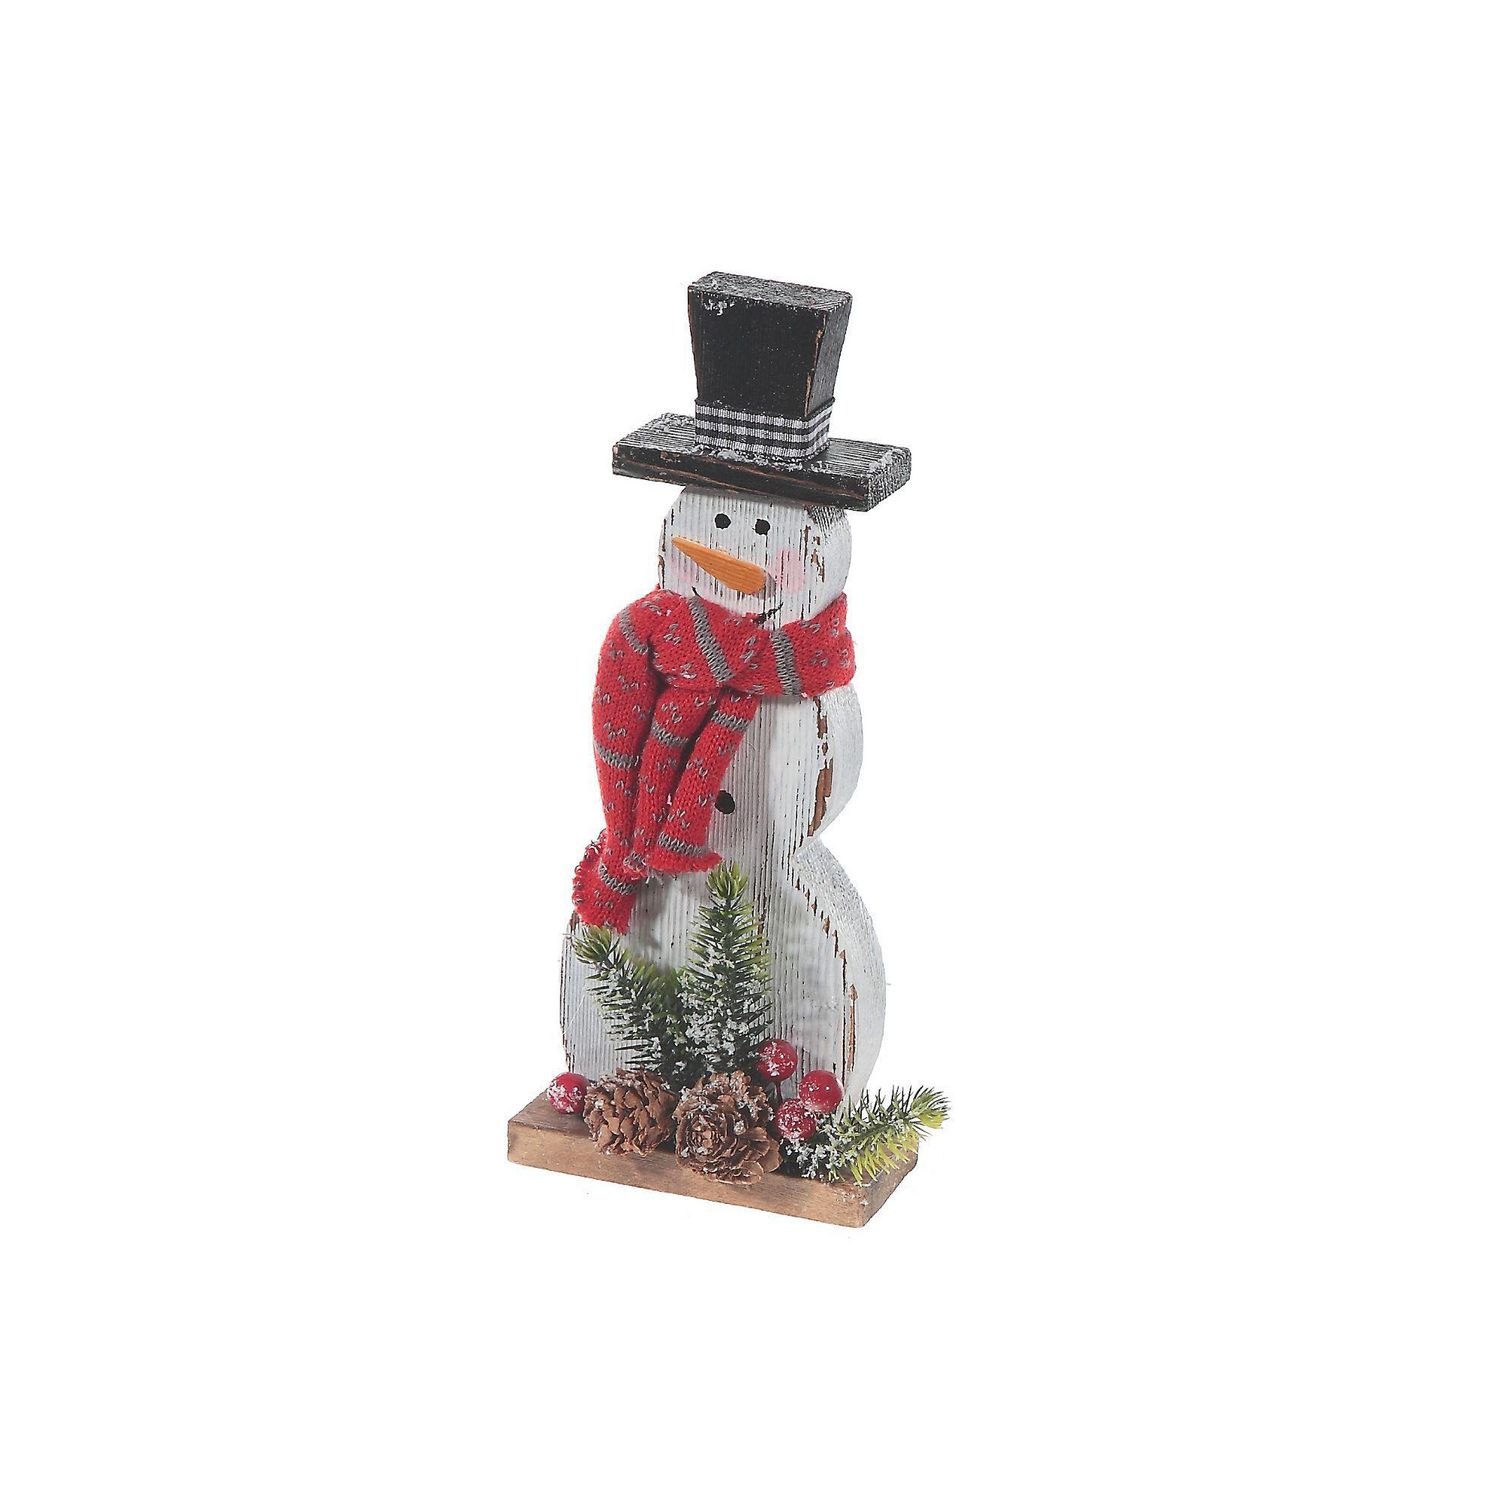 Wooden Snowman Figurine With Pine Needle Décor | Walmart Canada